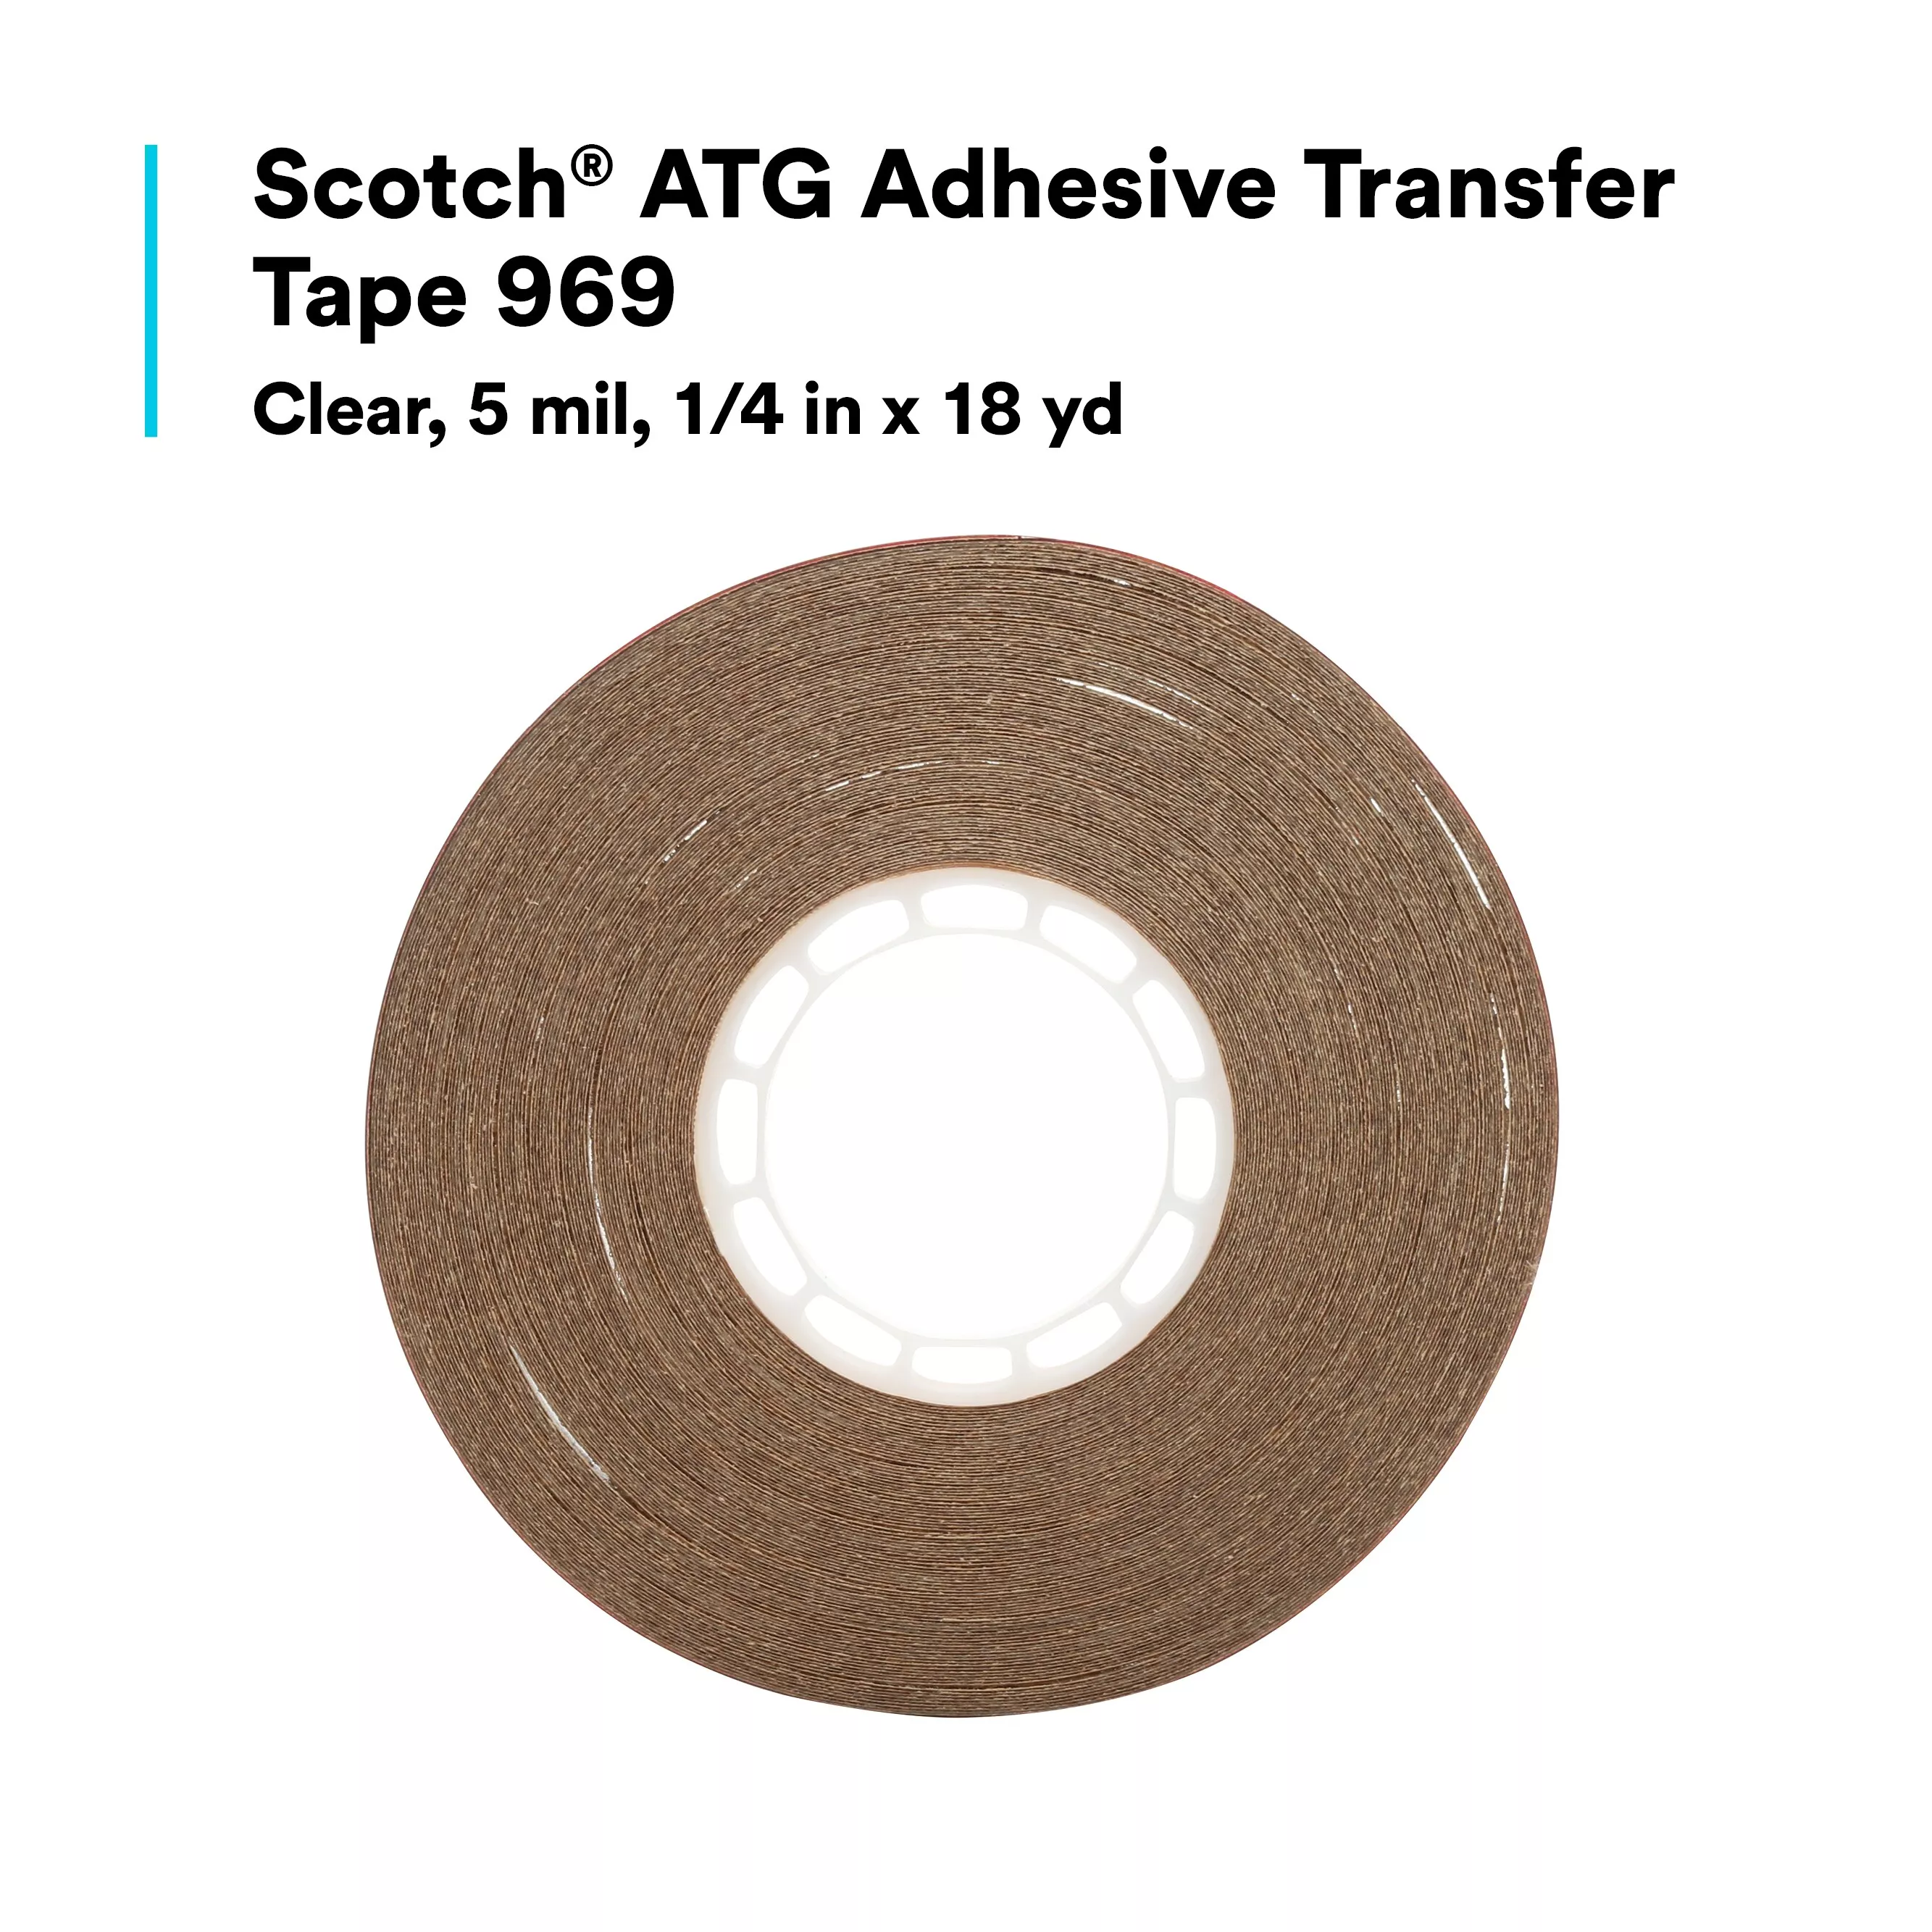 SKU 7000123406 | Scotch® ATG Adhesive Transfer Tape 969